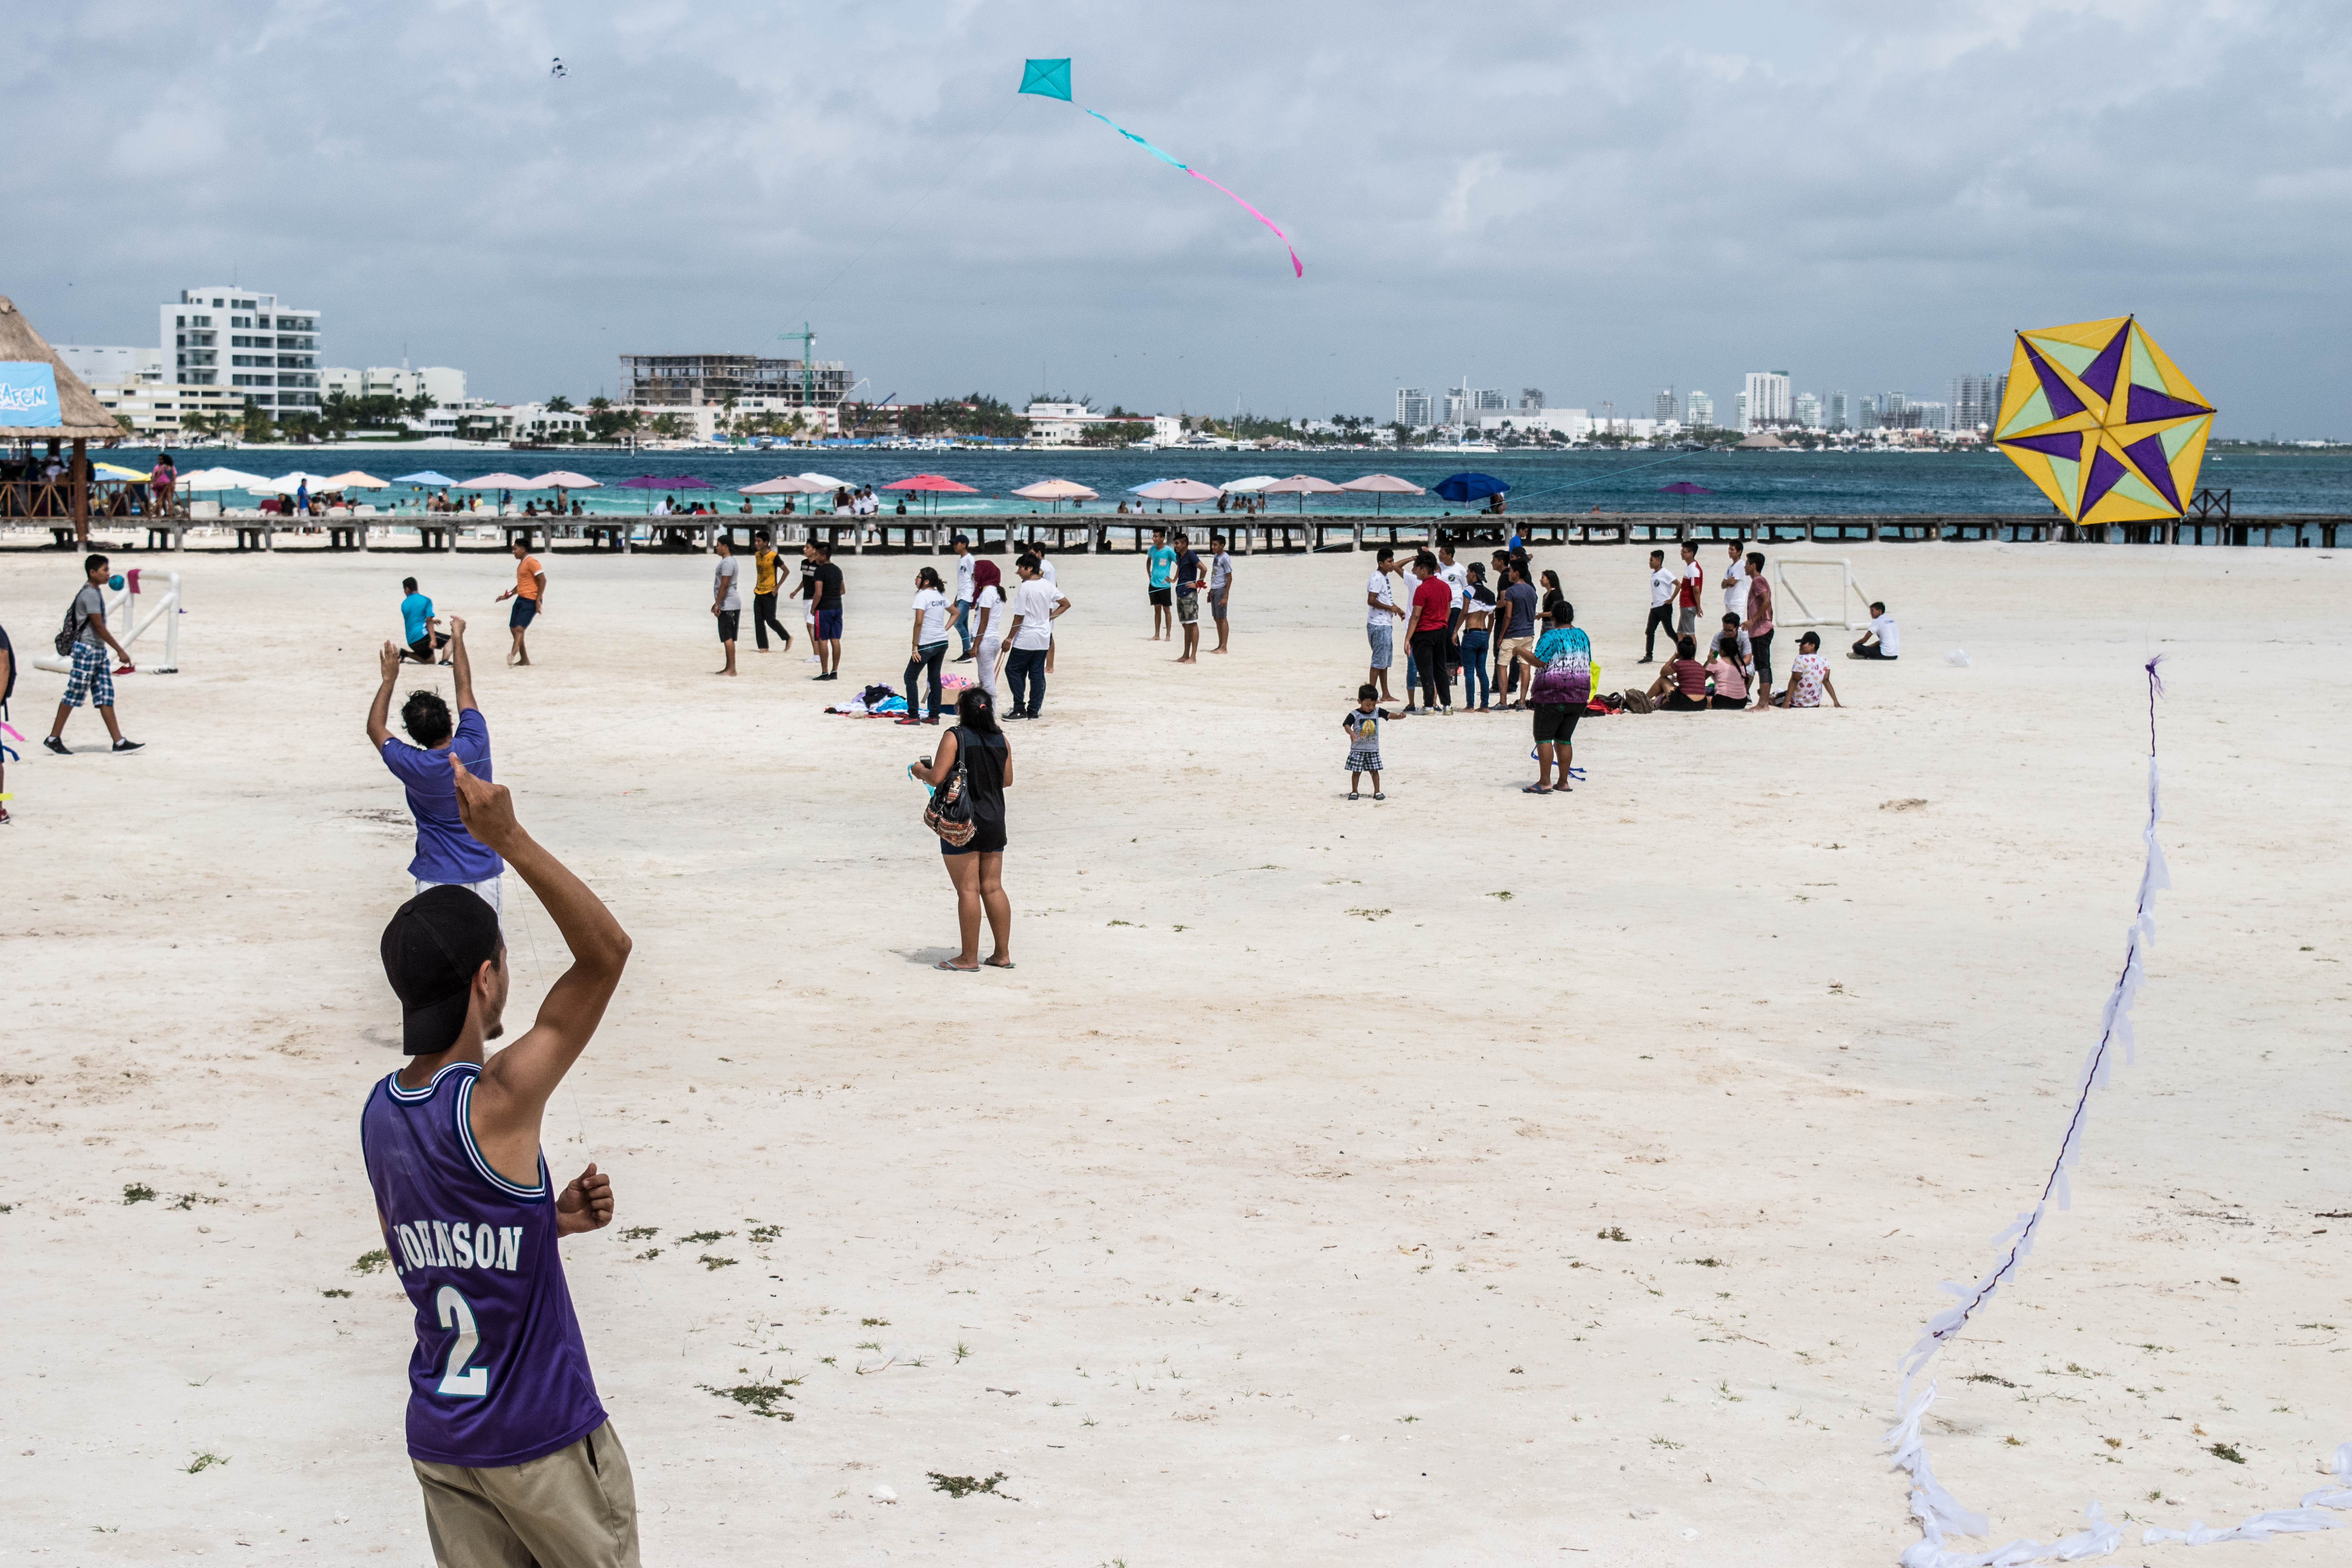 kids flying kites